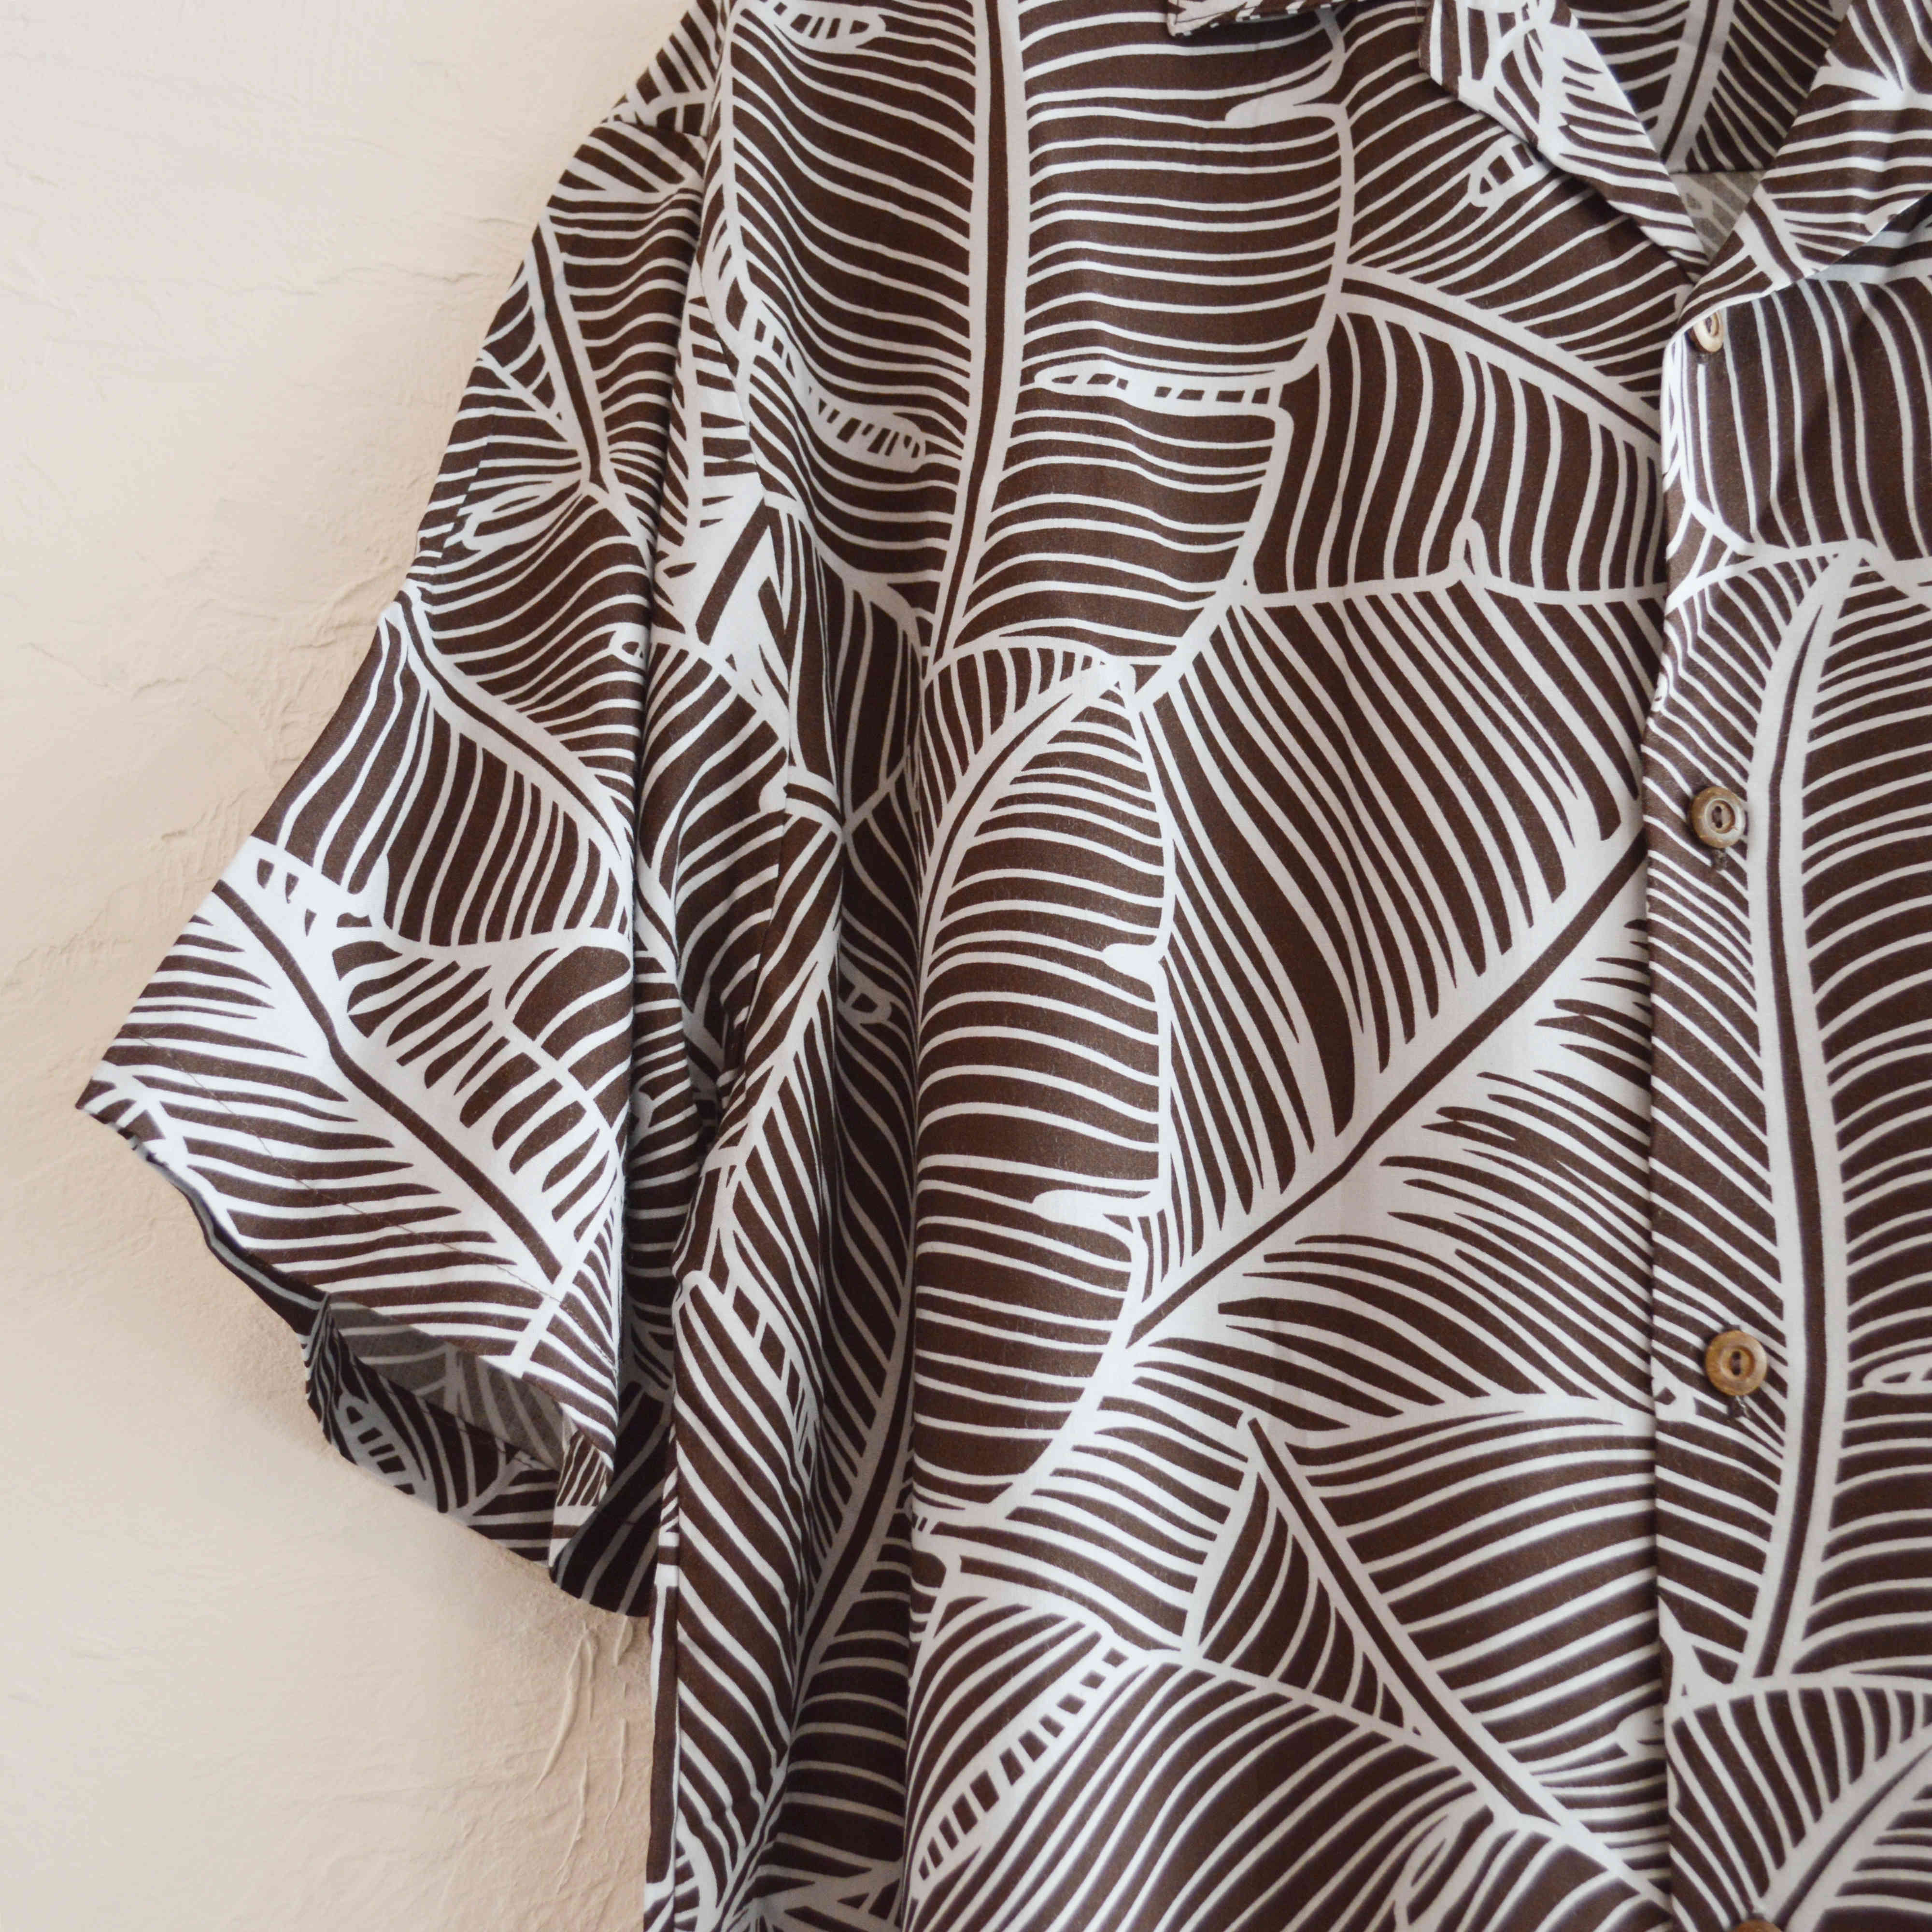 Hilo Hattie / Rayon Aloha Shirt (BROWN)